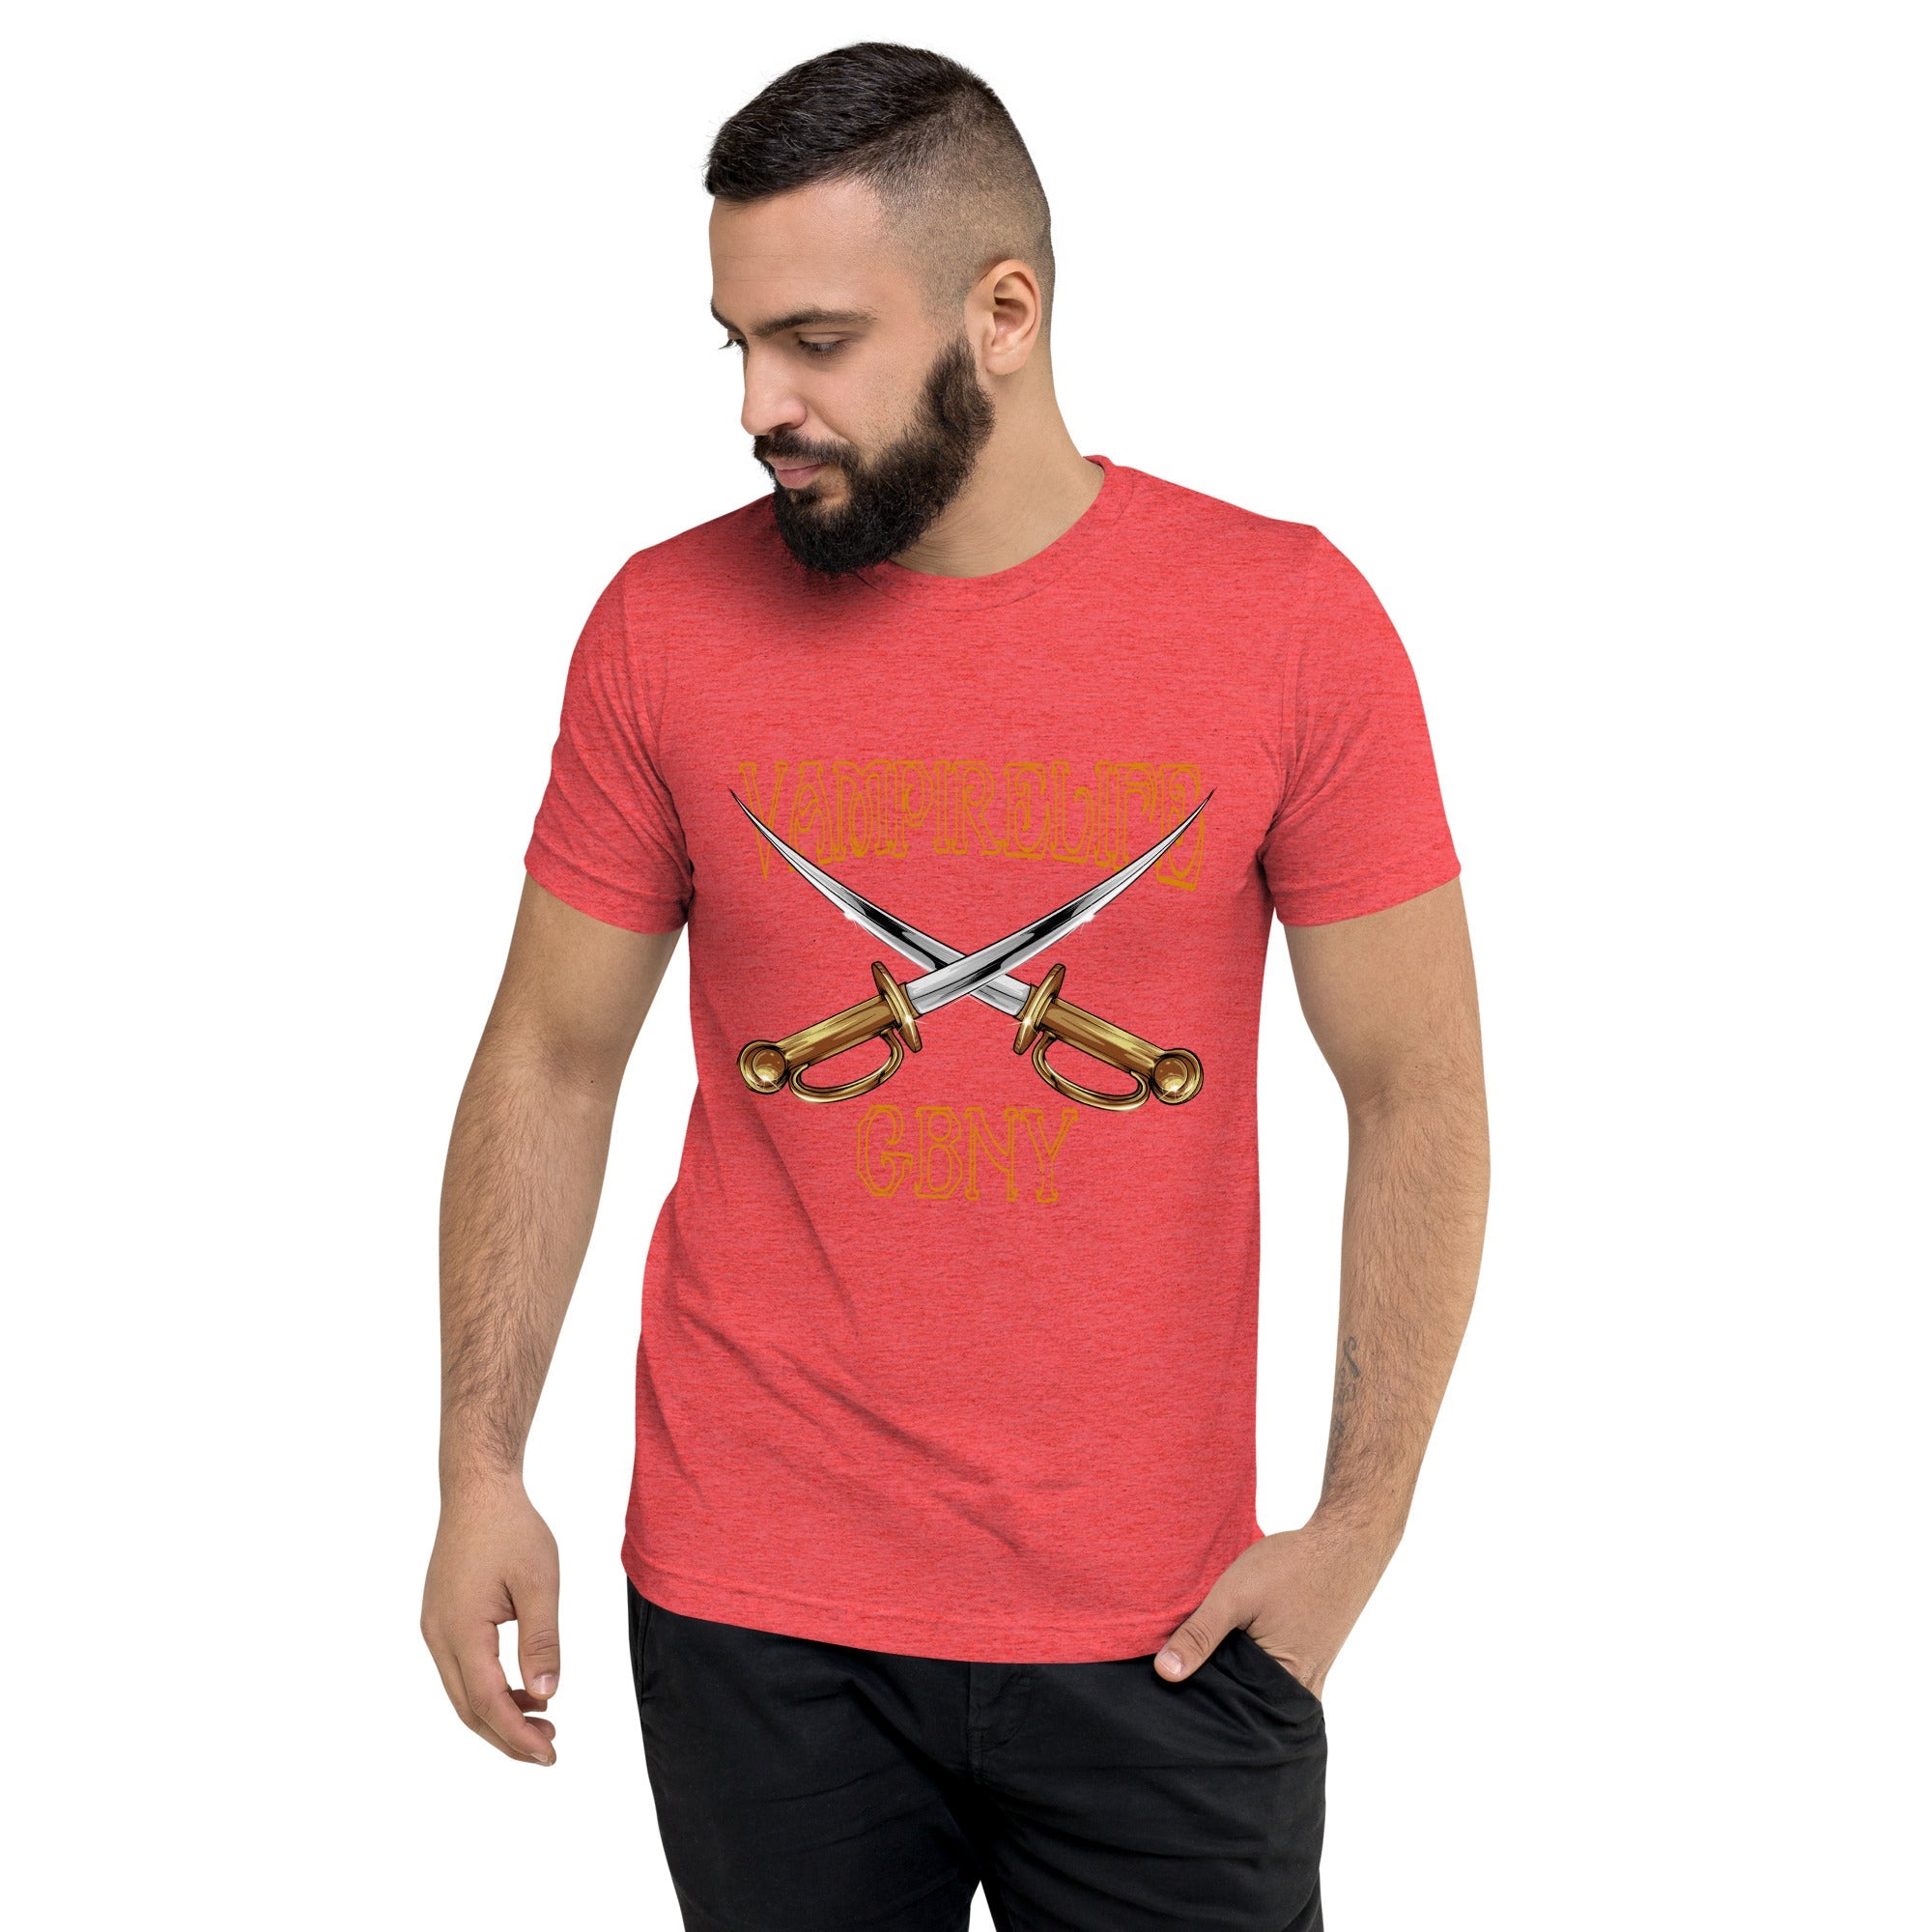 GBNY Red Triblend / XS Vamp Life X GBNY "Cross Swords" T-shirt - Men's 3322256_6576